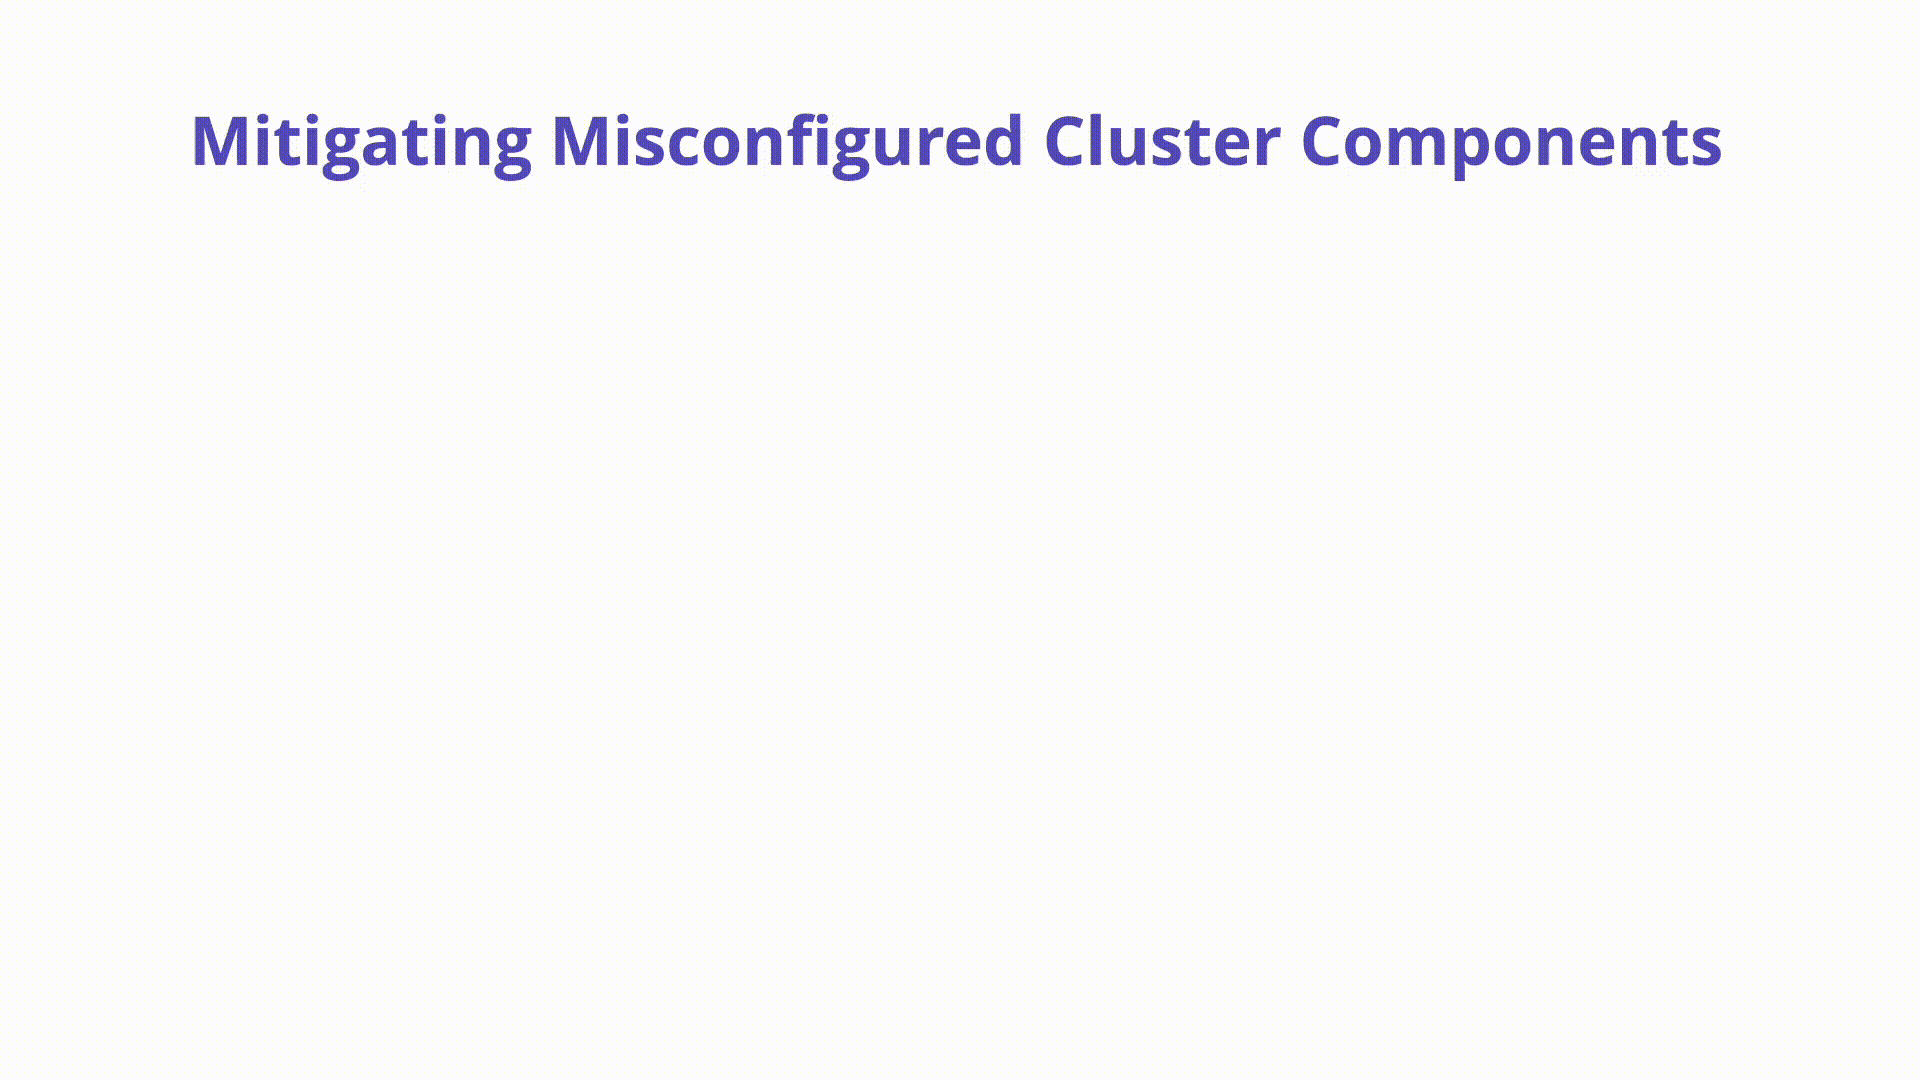 Misconfigured Cluster Components -
Mitigations